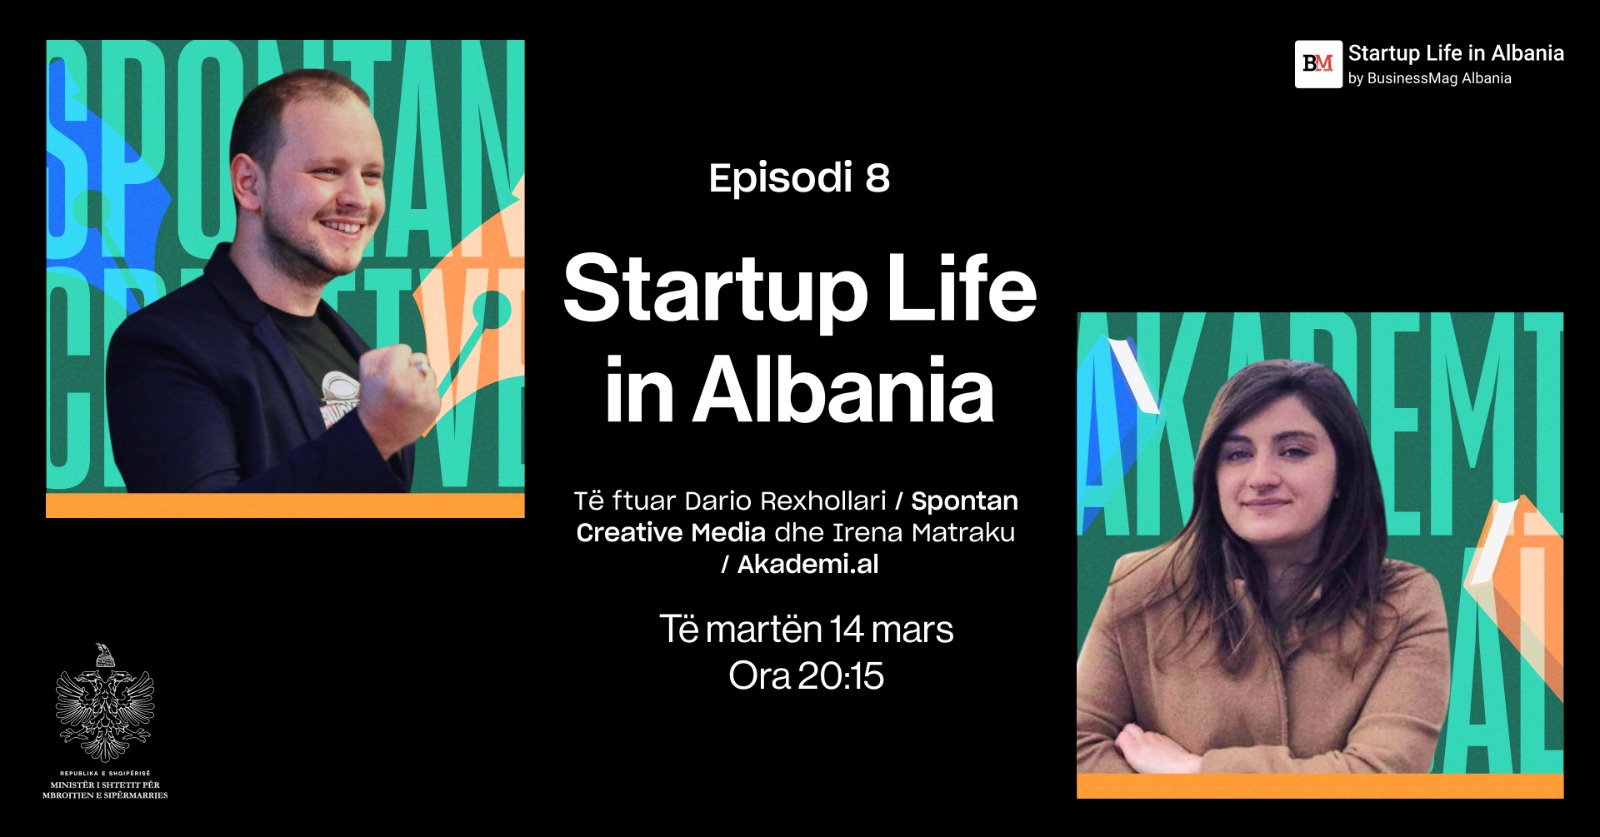 STARTUP LIFE IN ALBANIA: Spontan Creative Media & Akademi.al